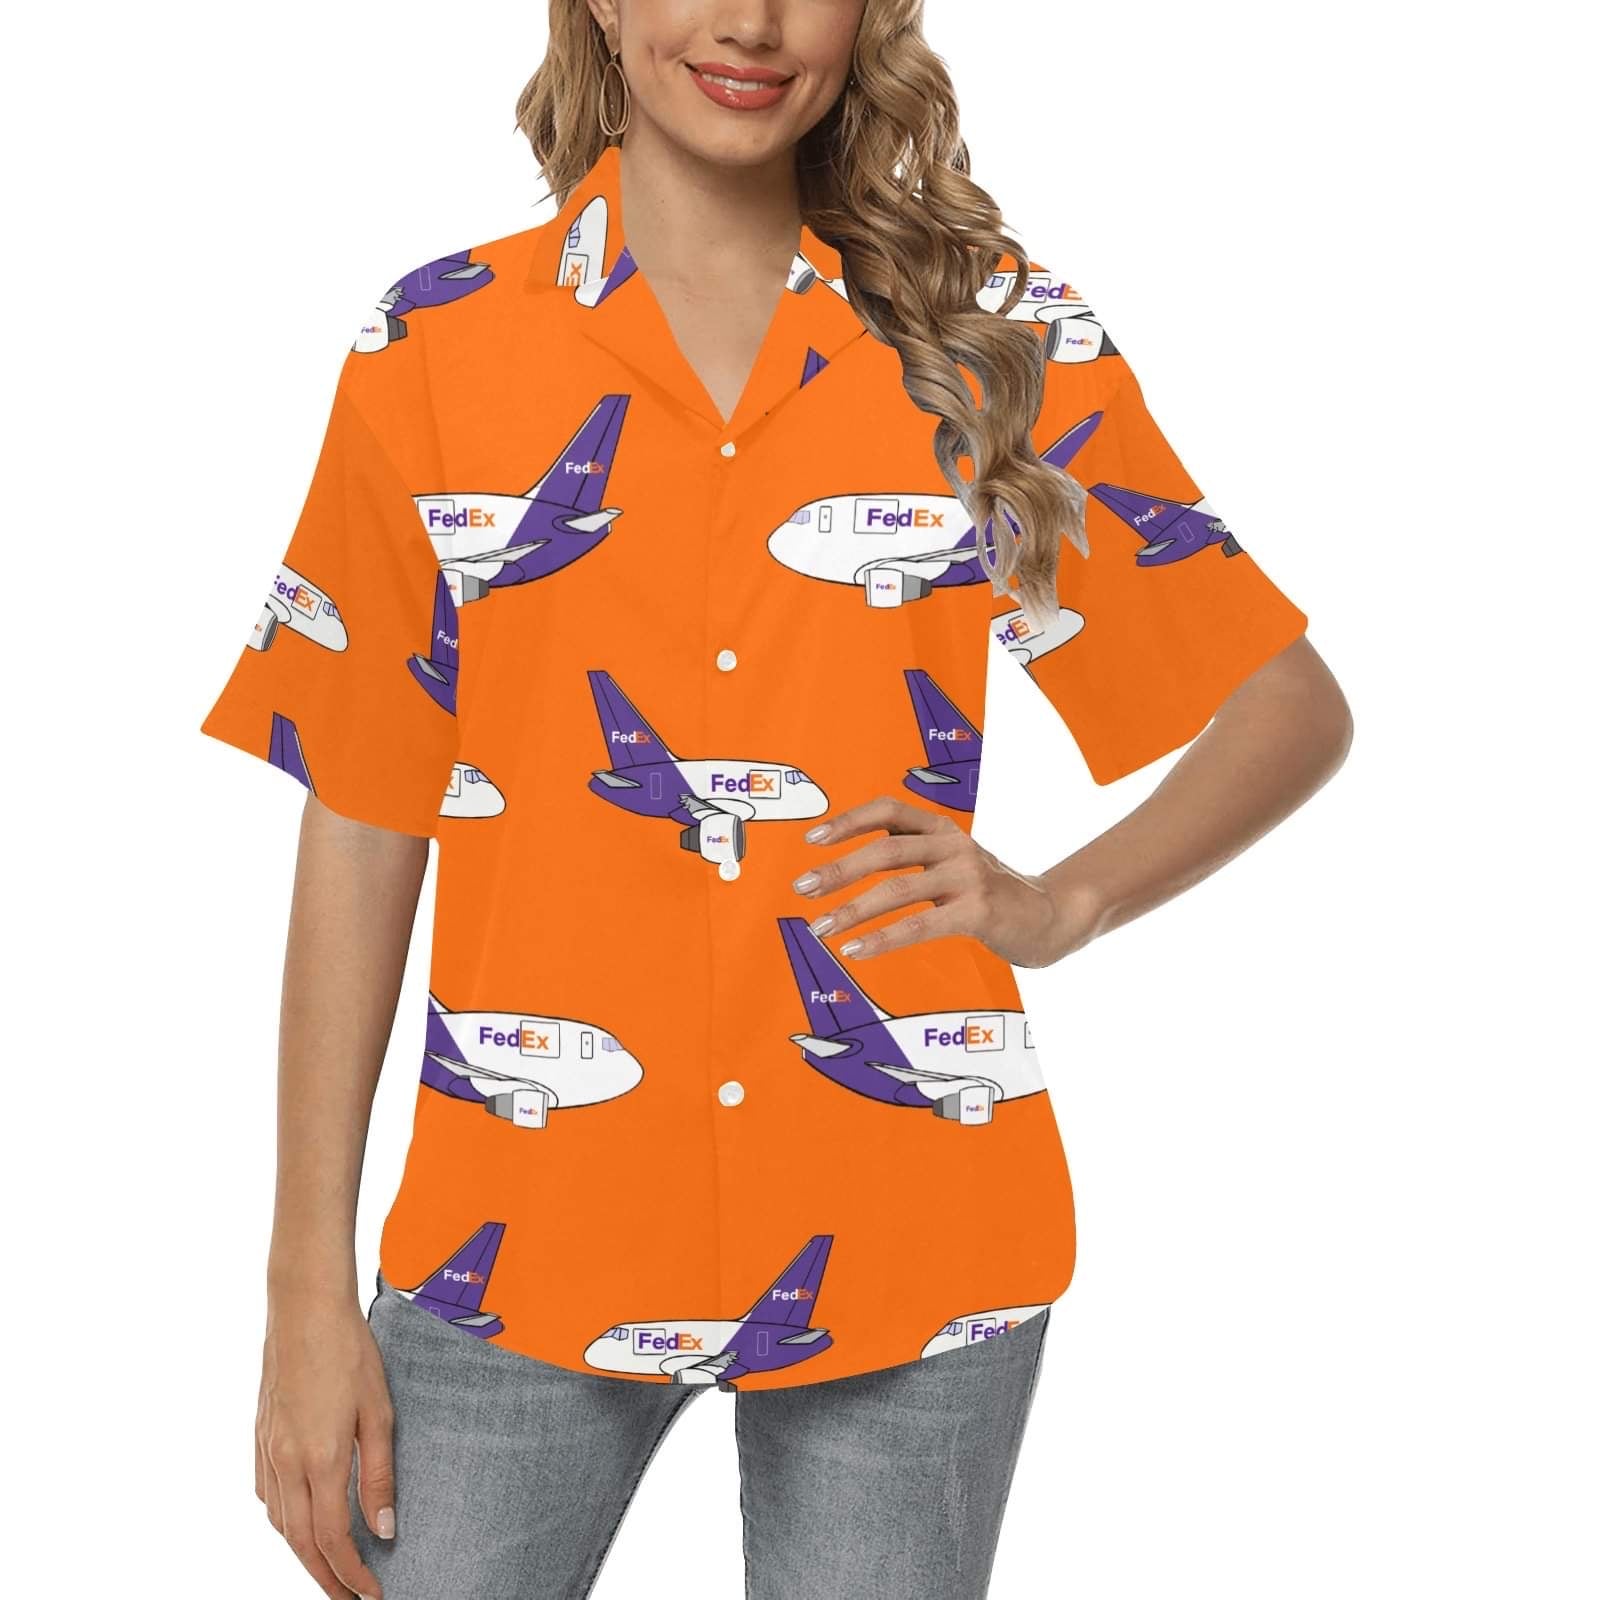 Women wearing Orange shirt with FEDEX airplanes